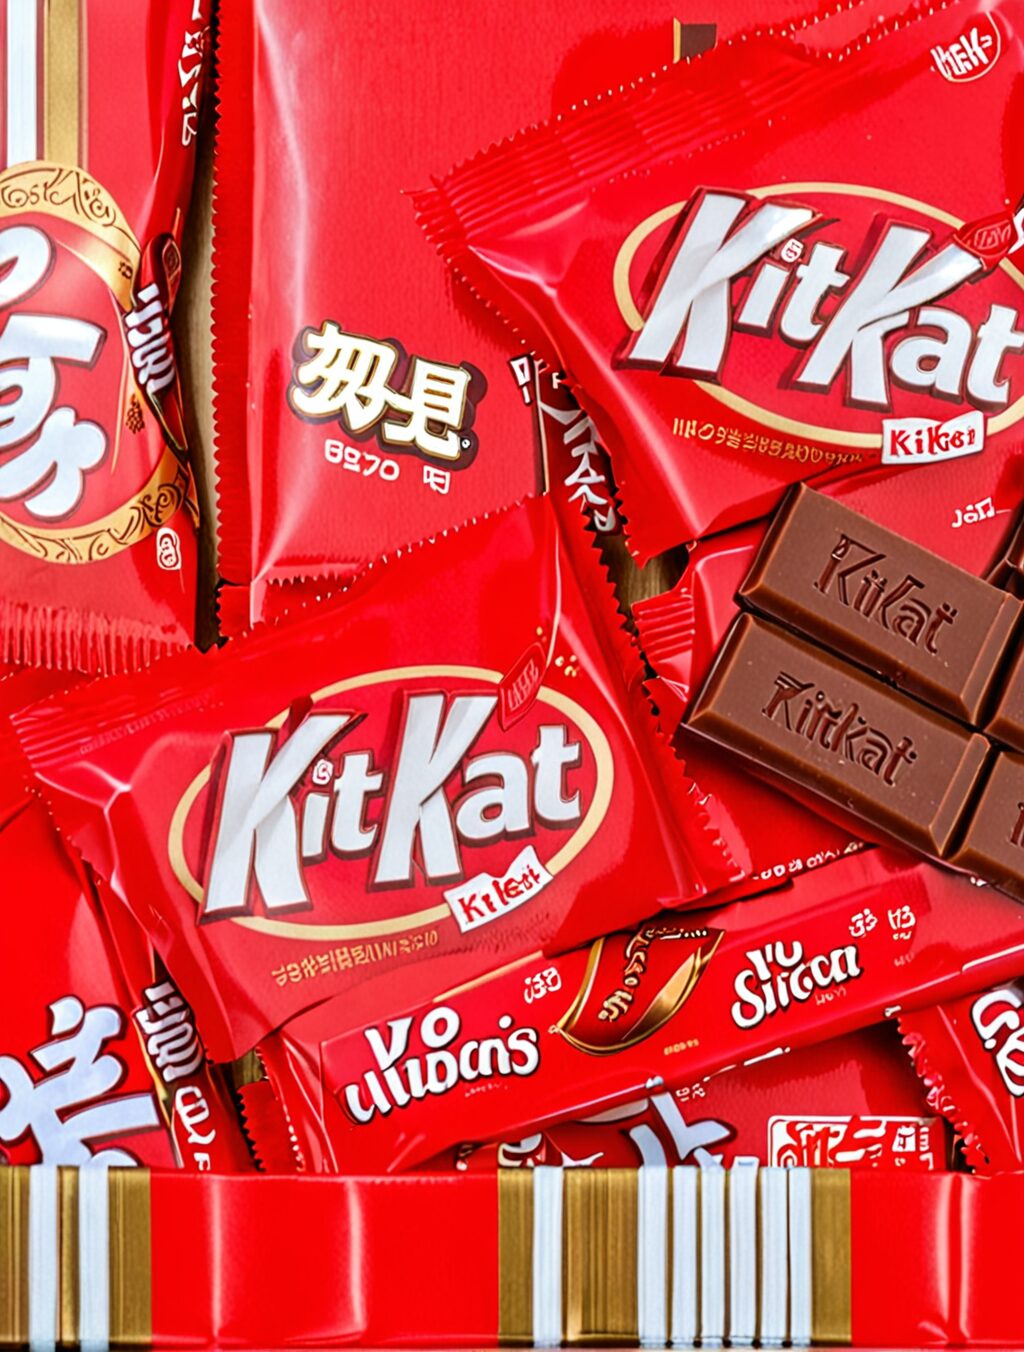 why is kitkat so popular in japan